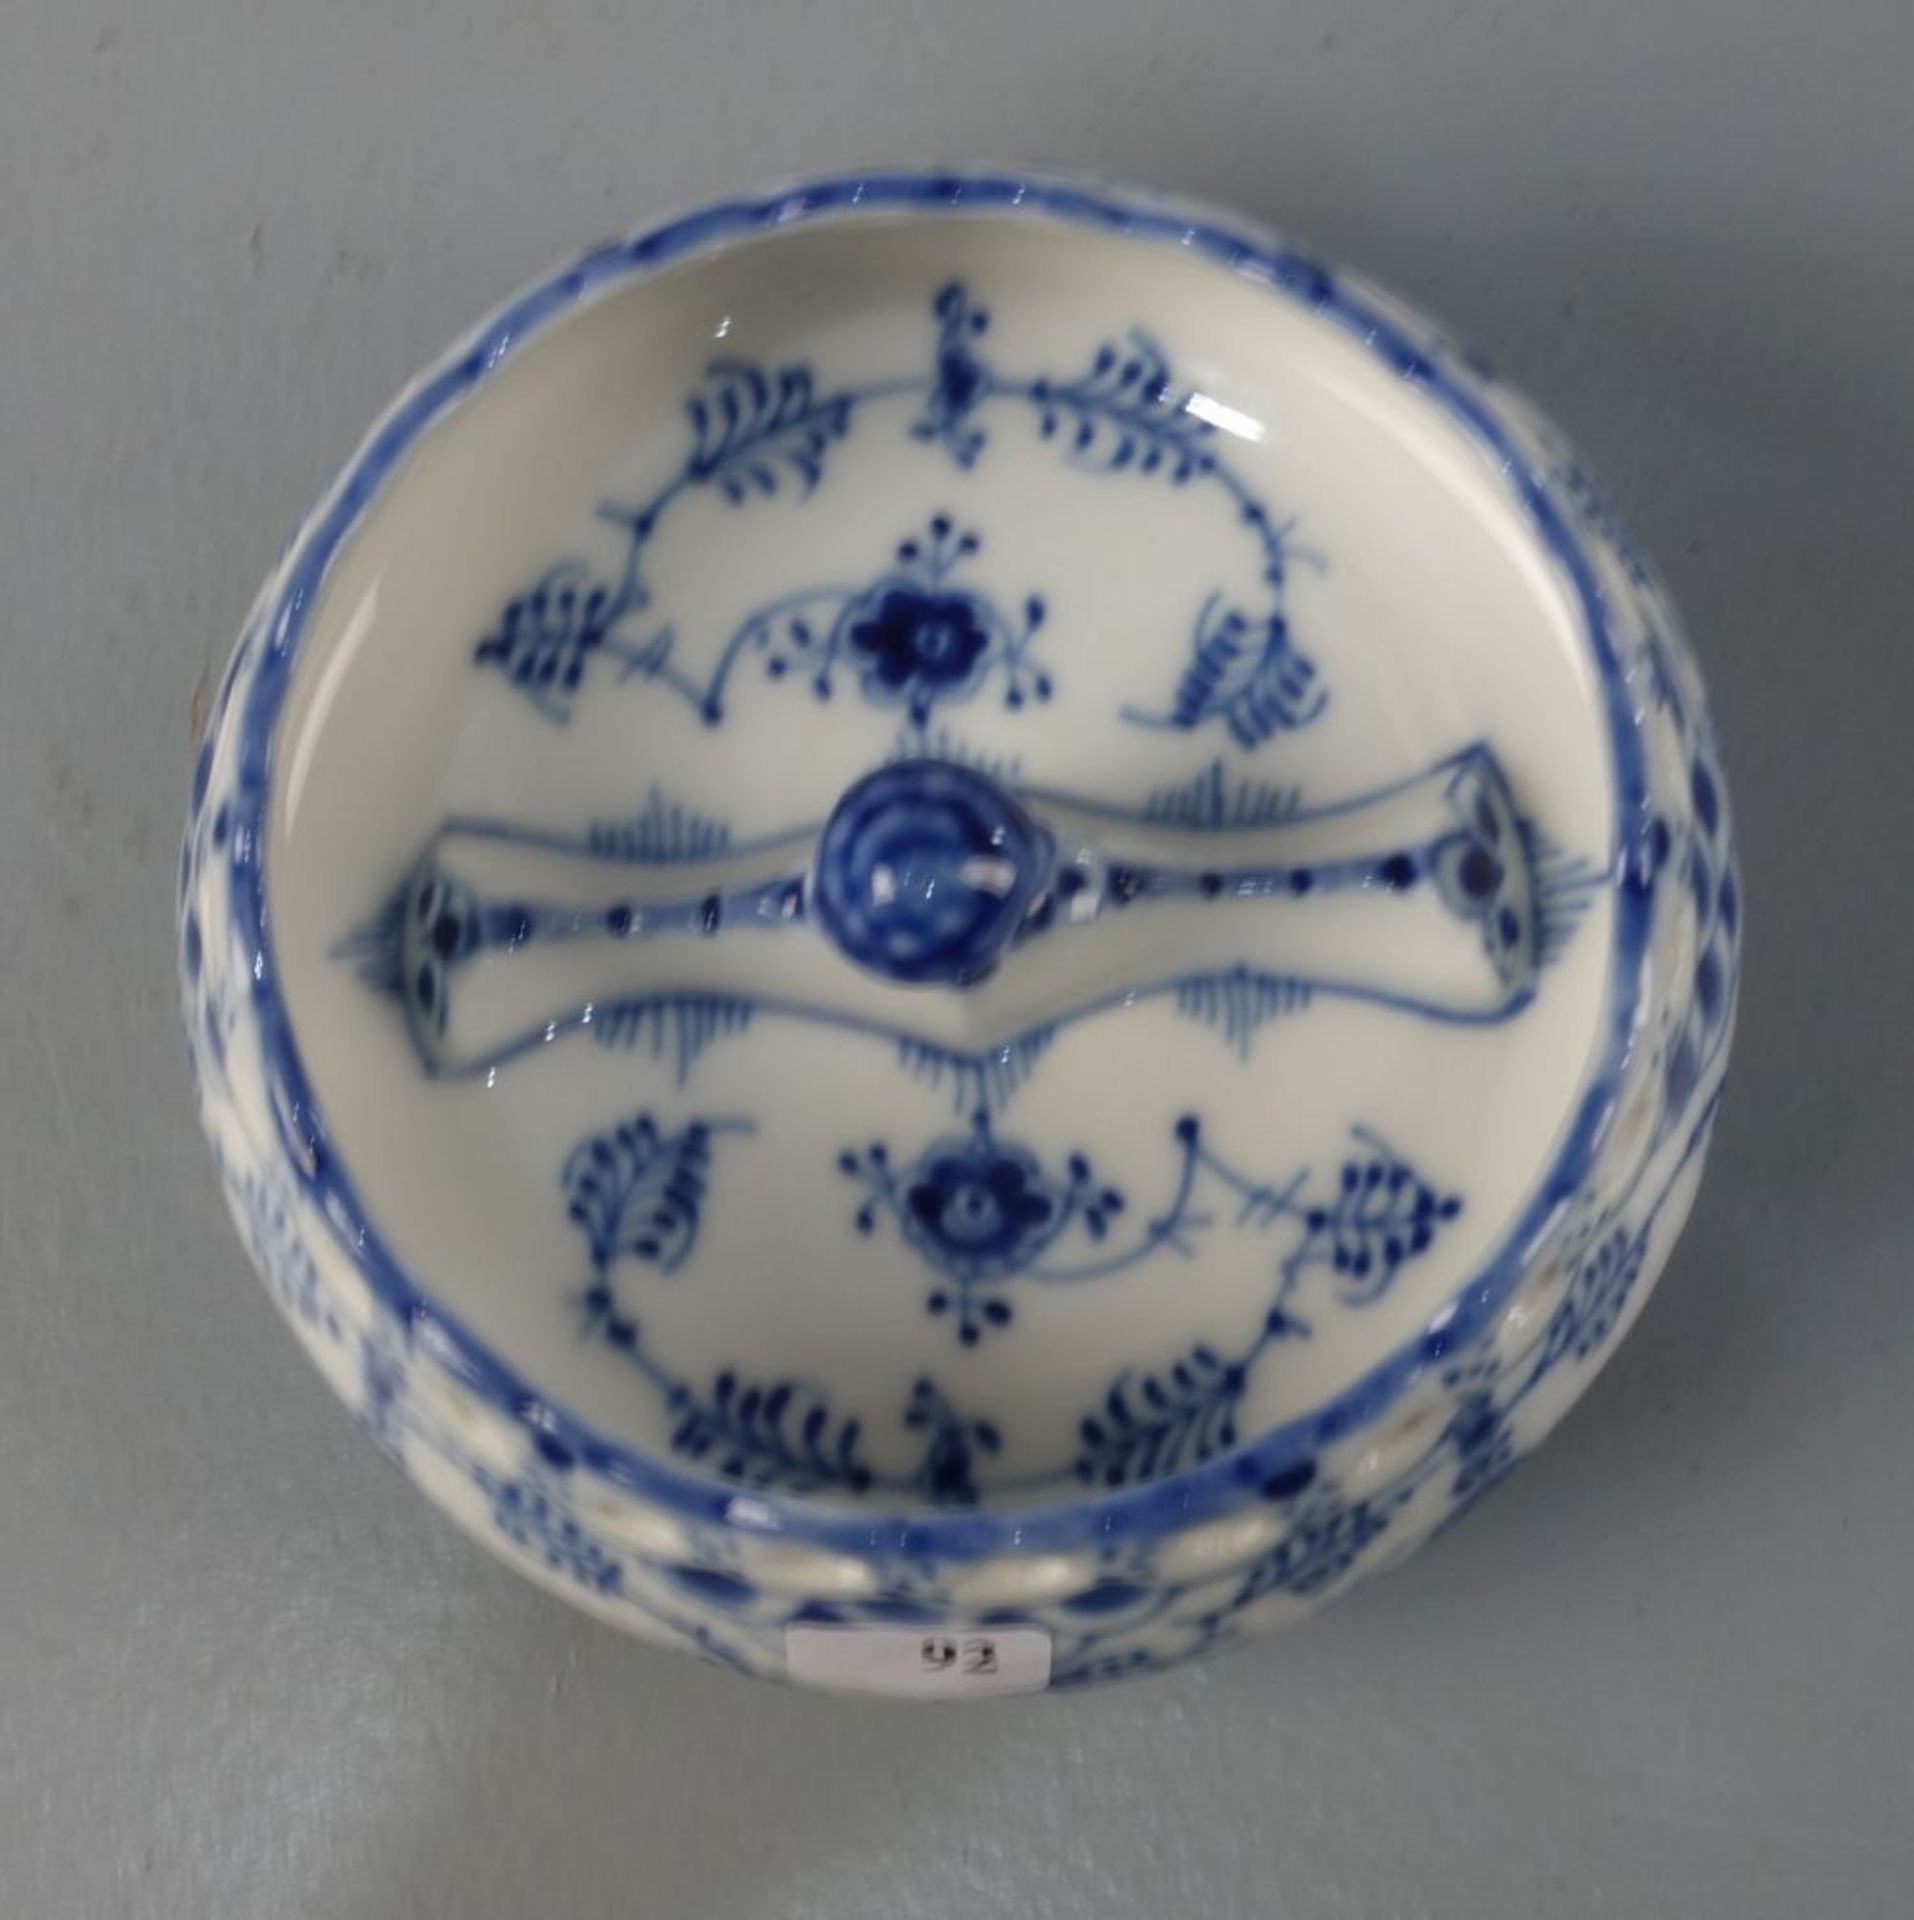 SCHALE / CABARET / RINGSCHALE / bowl, "MUSSELMALET VOLLSPITZE", Porzellan, Manufaktur Royal - Image 2 of 4